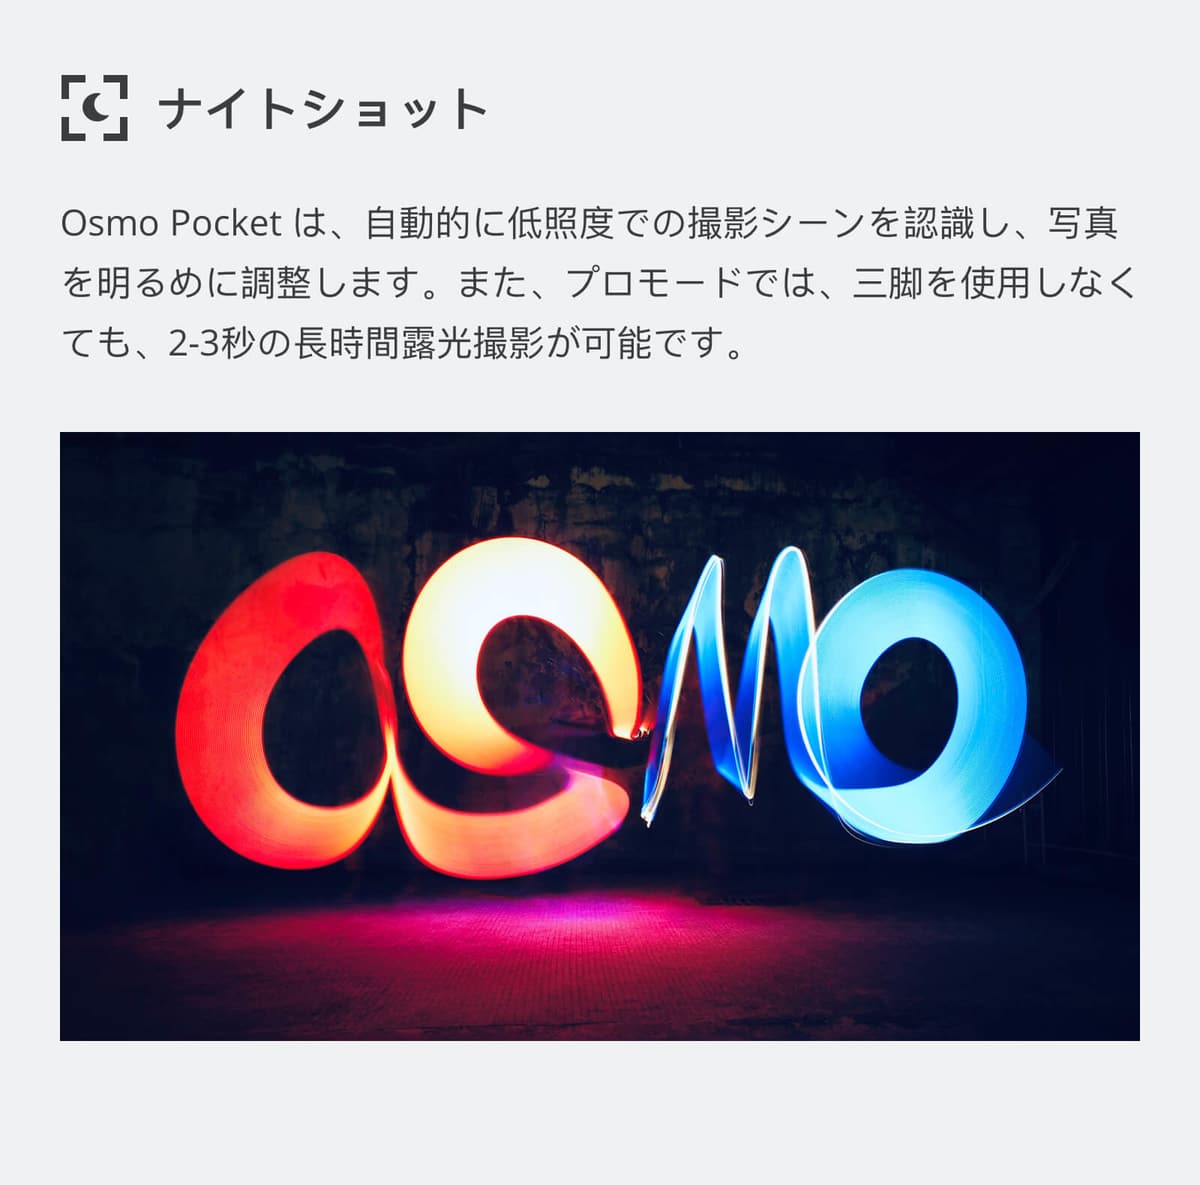 DJI OSMO Pocket